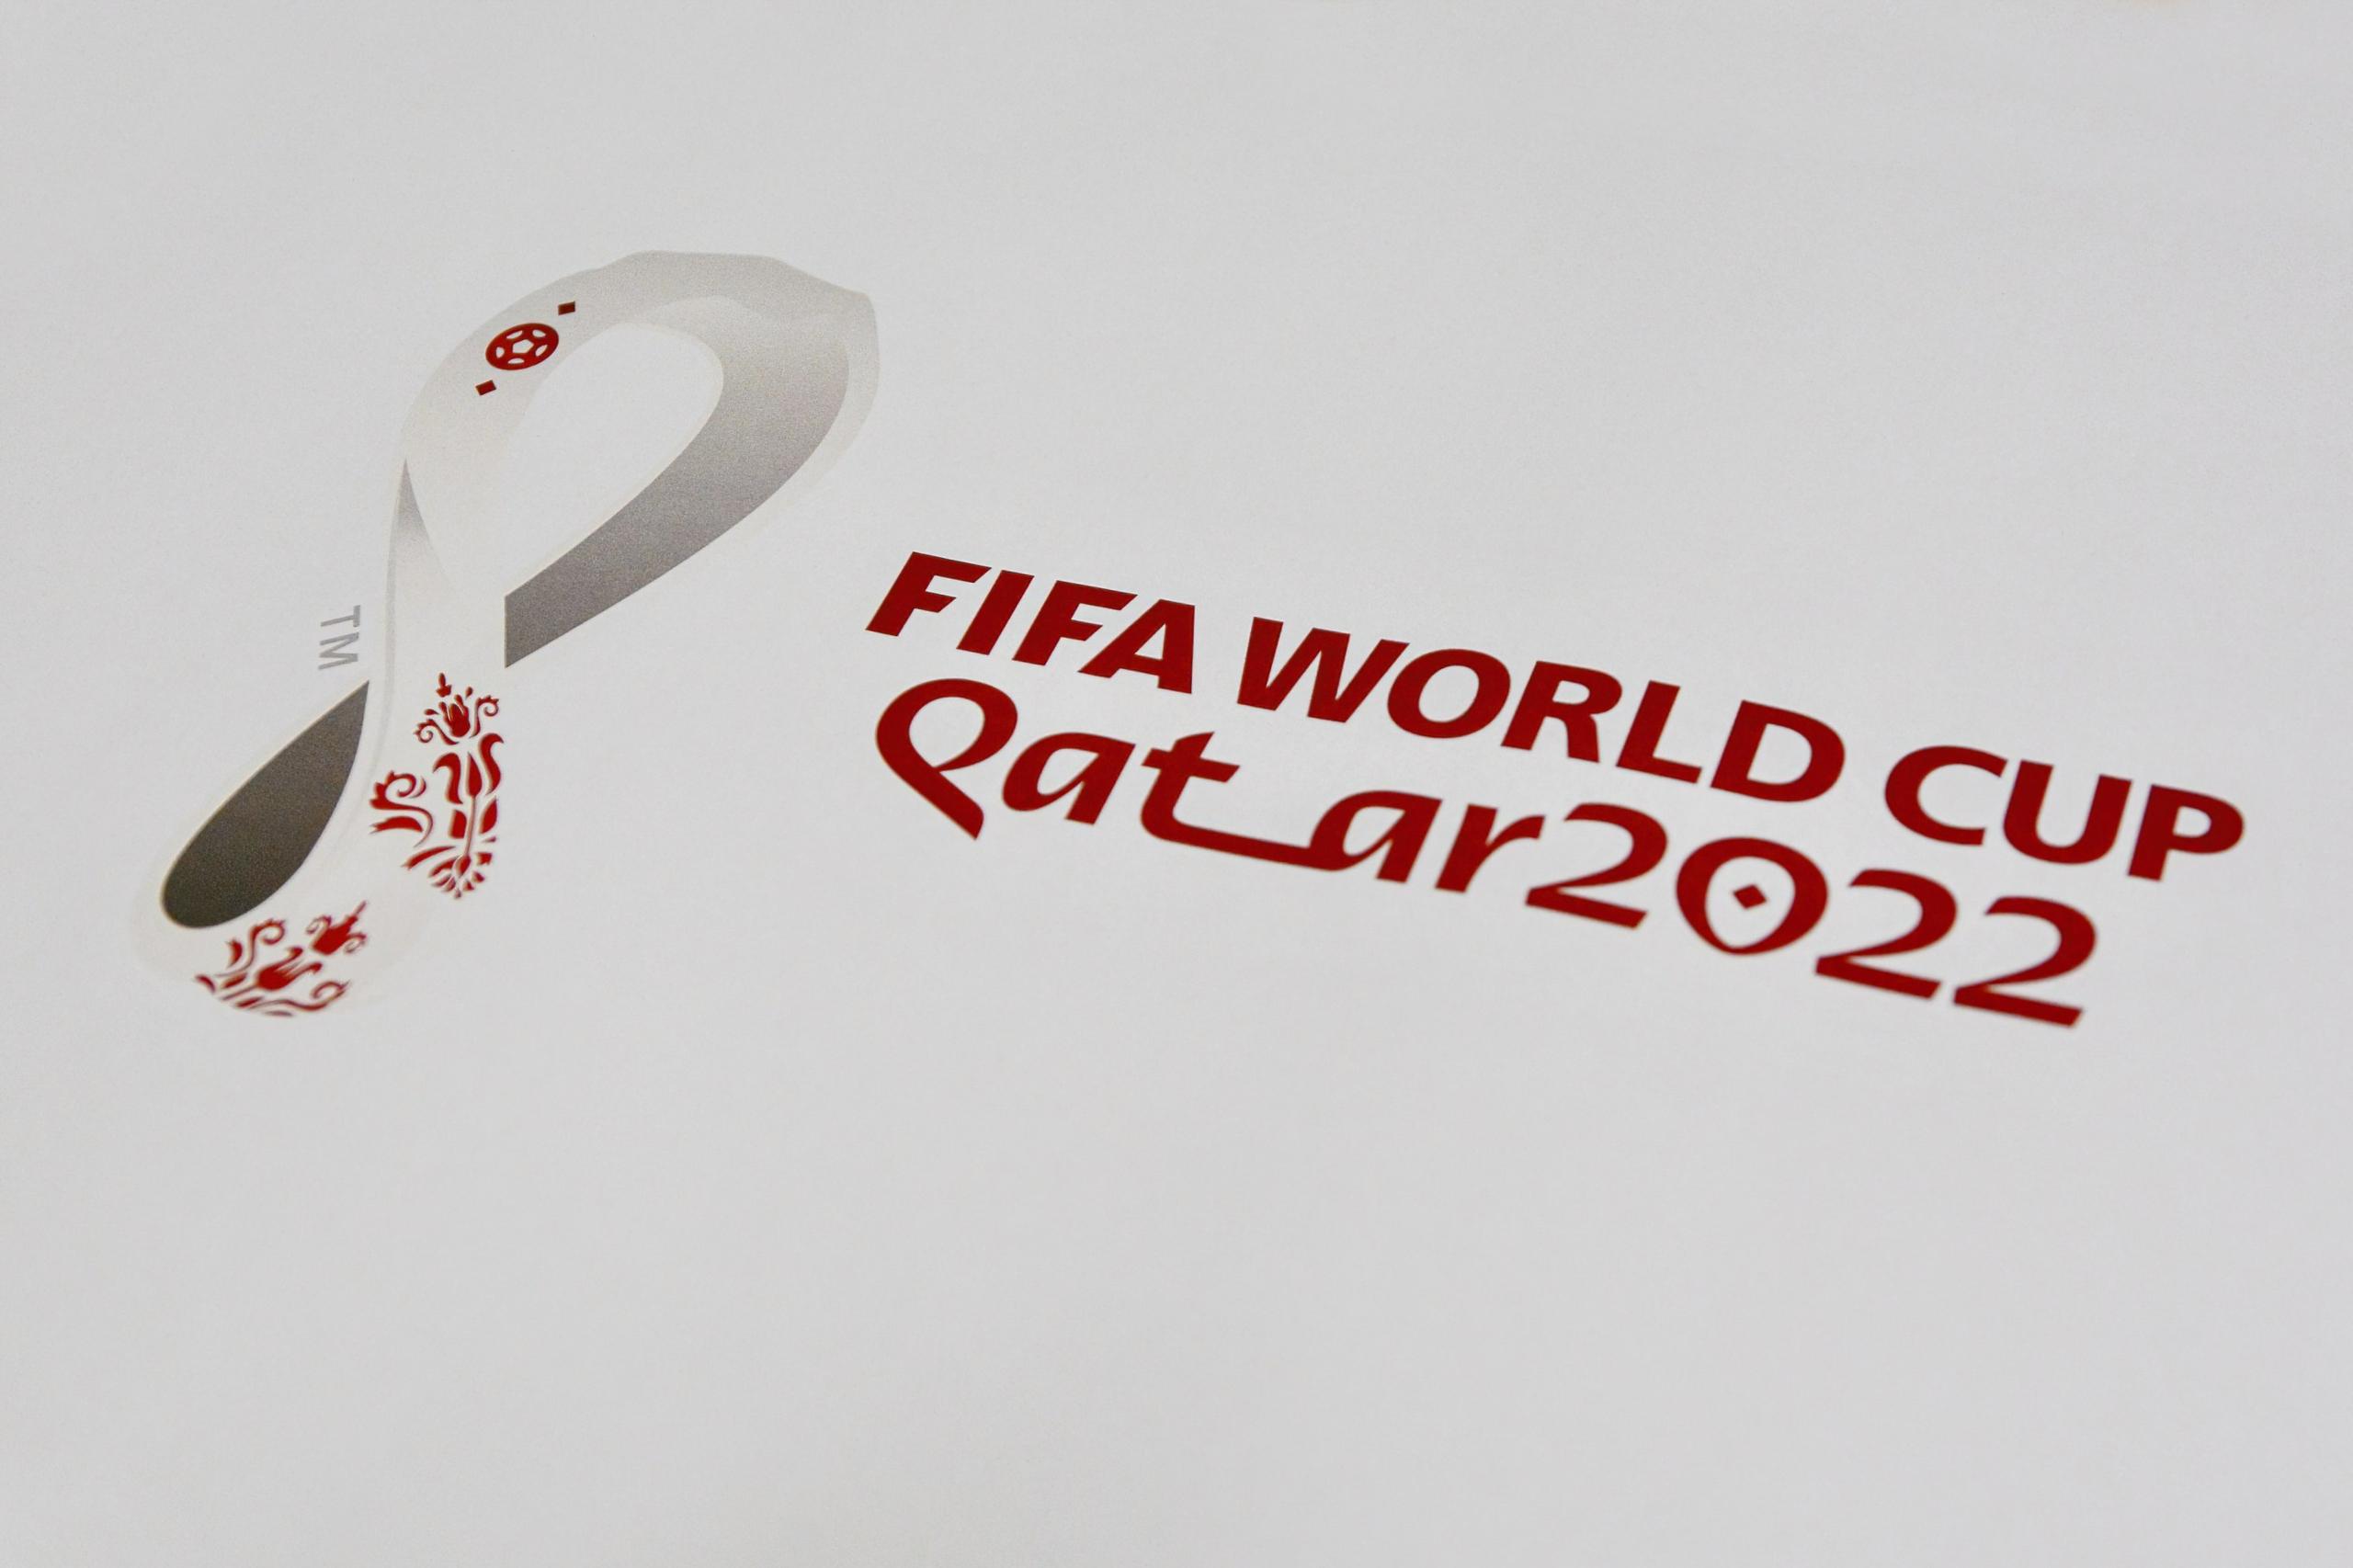 2022 FIFA World Cup HD Wallpaper